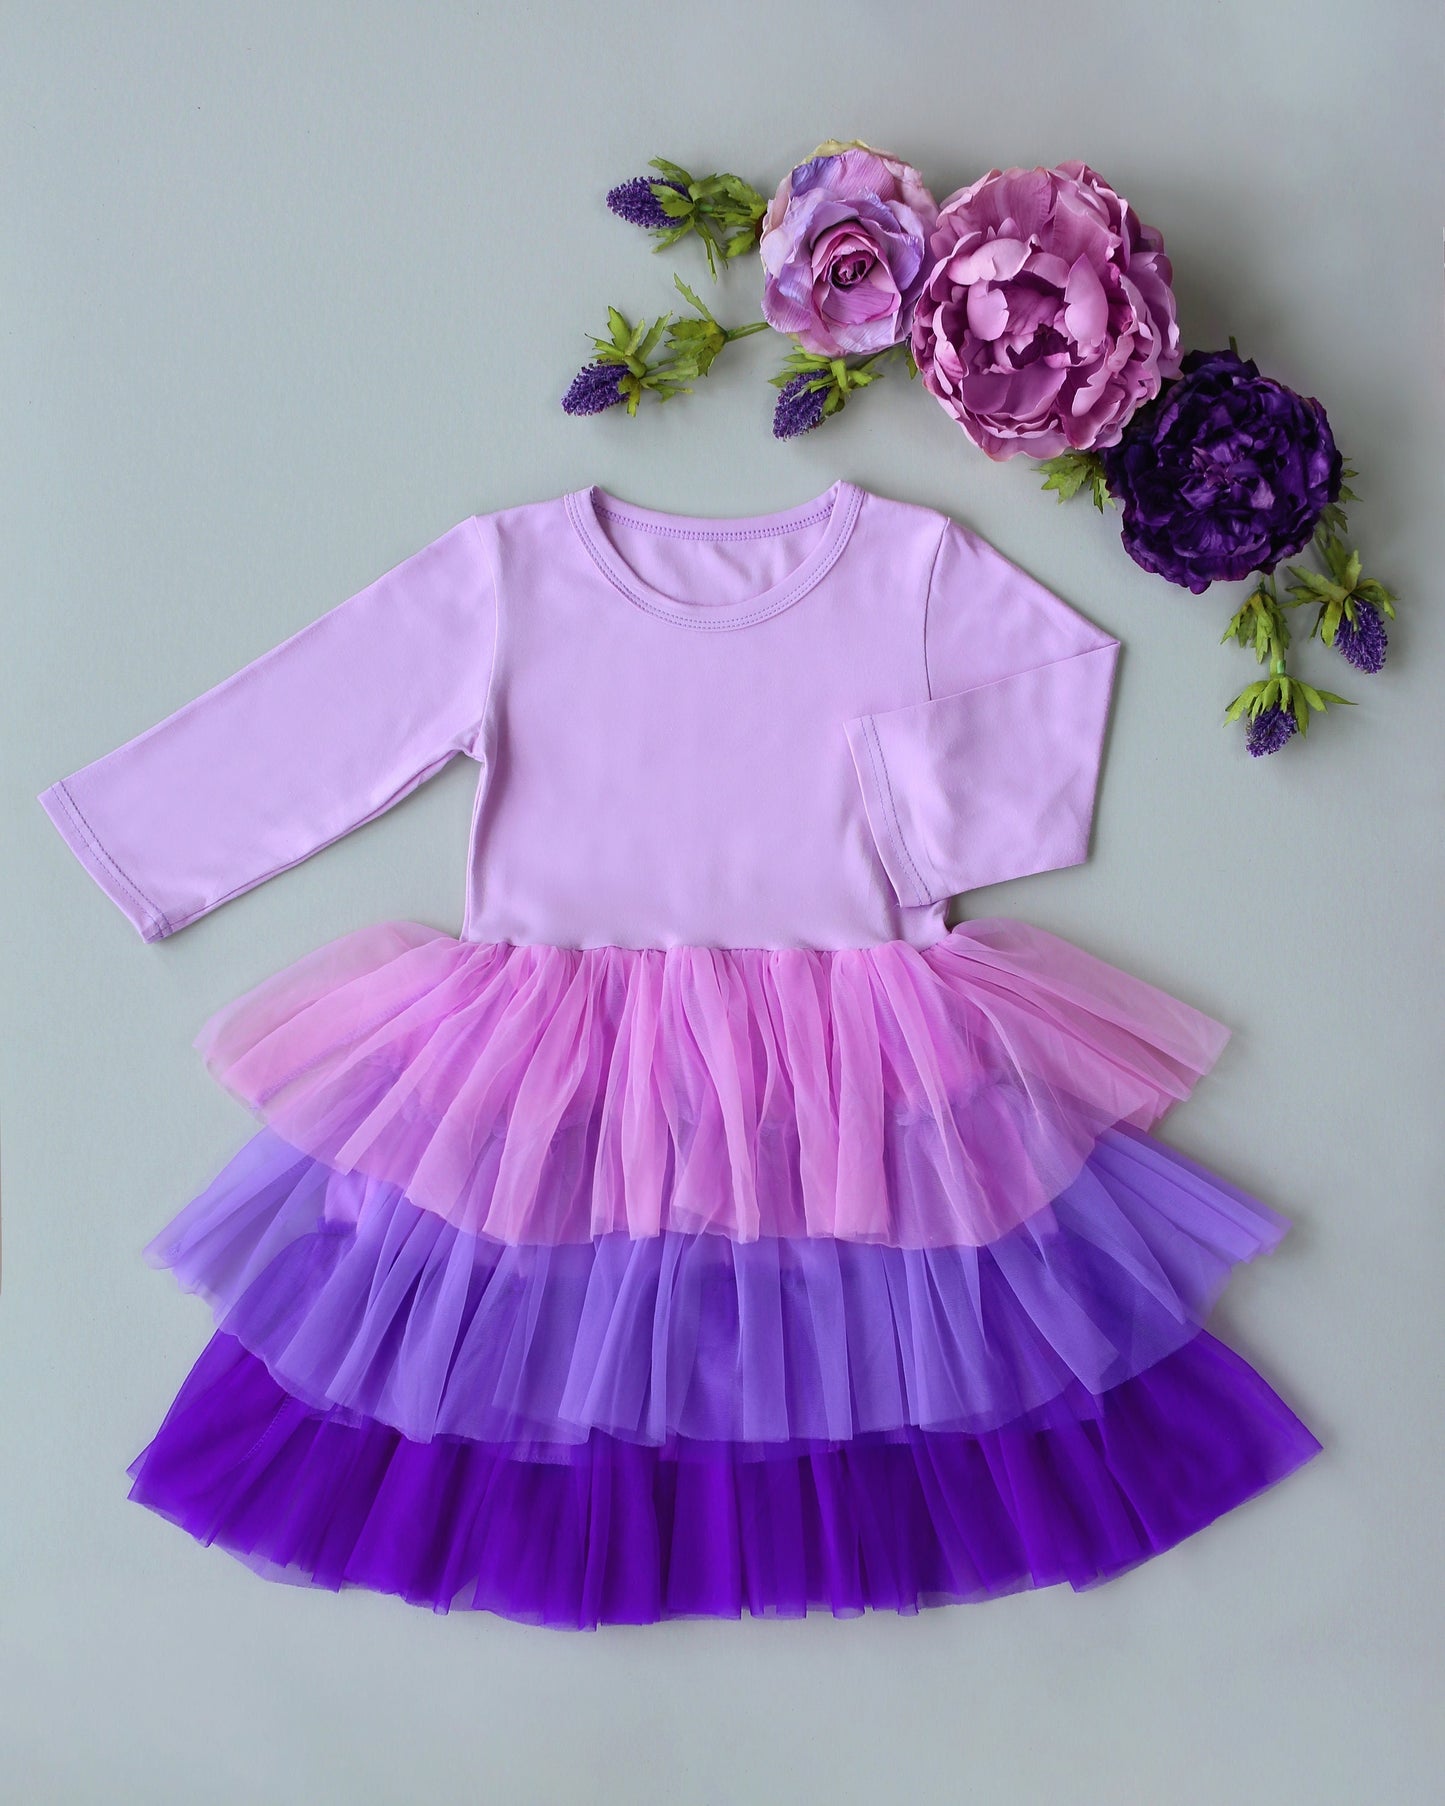 3/4 Sleeve Tutu Dress in Purple Ombre